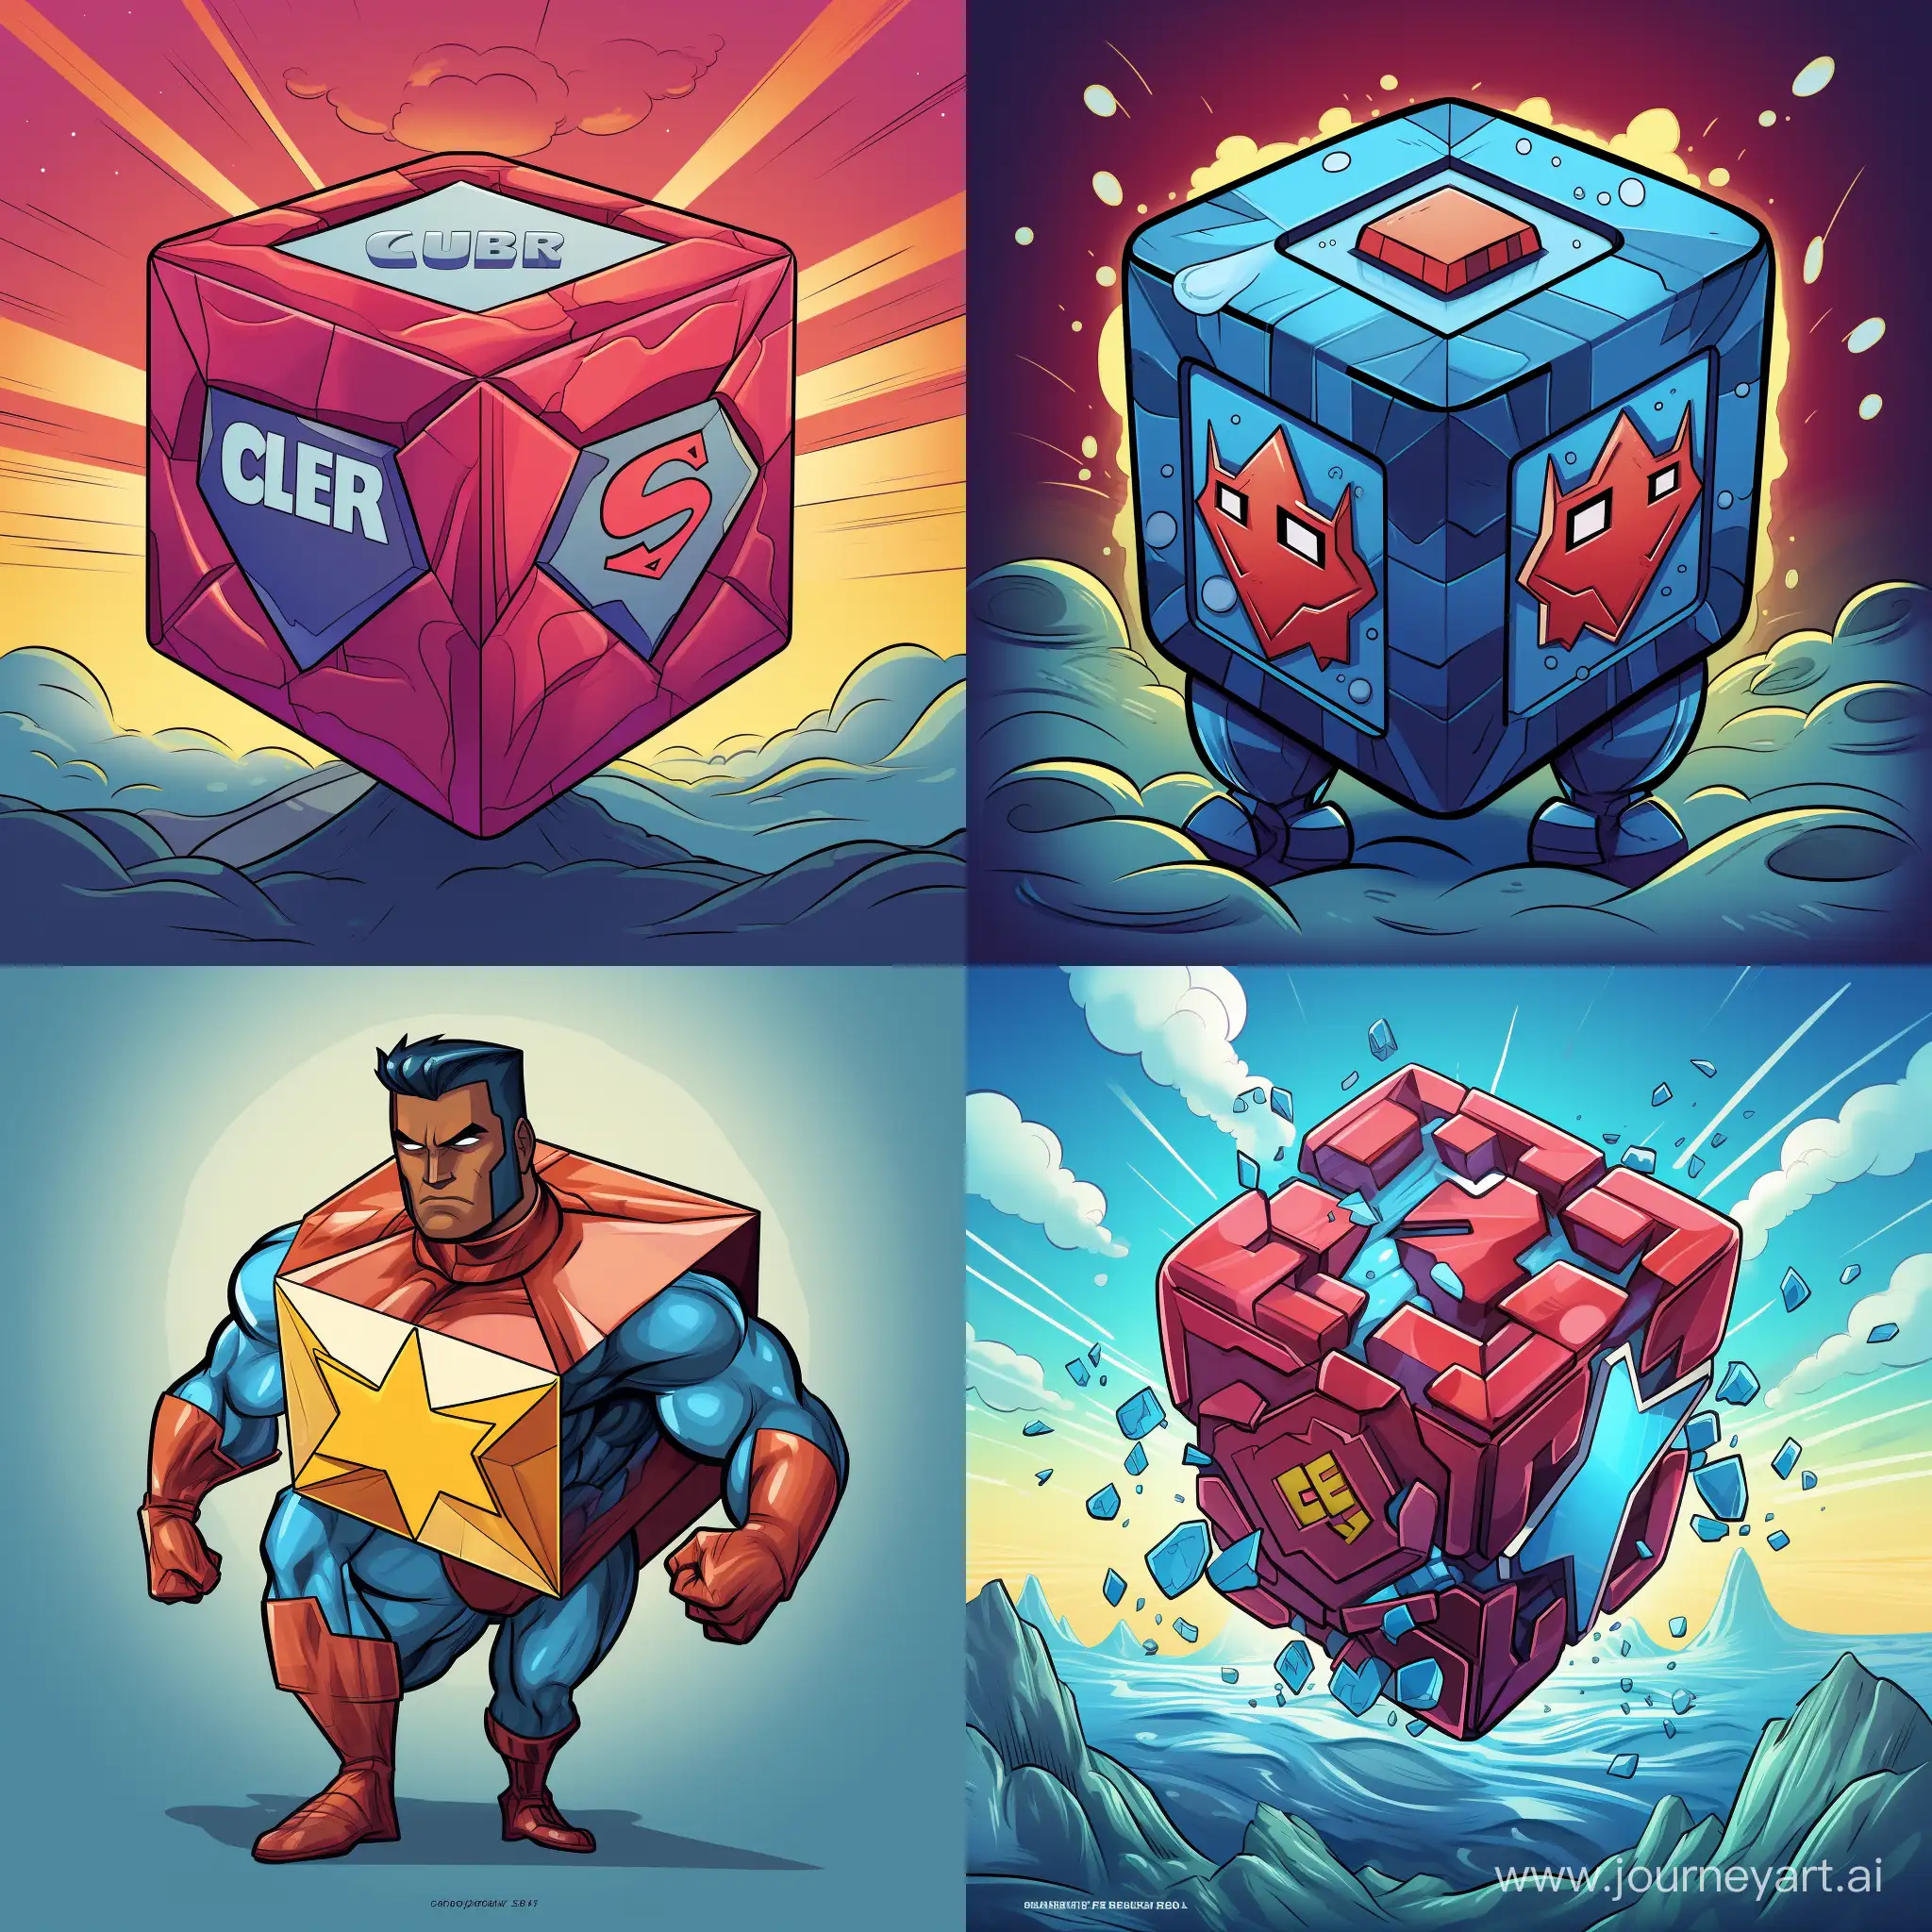 Cuber-The-Superhero-Cube-ActionPacked-11-Aspect-Ratio-Illustration-92805